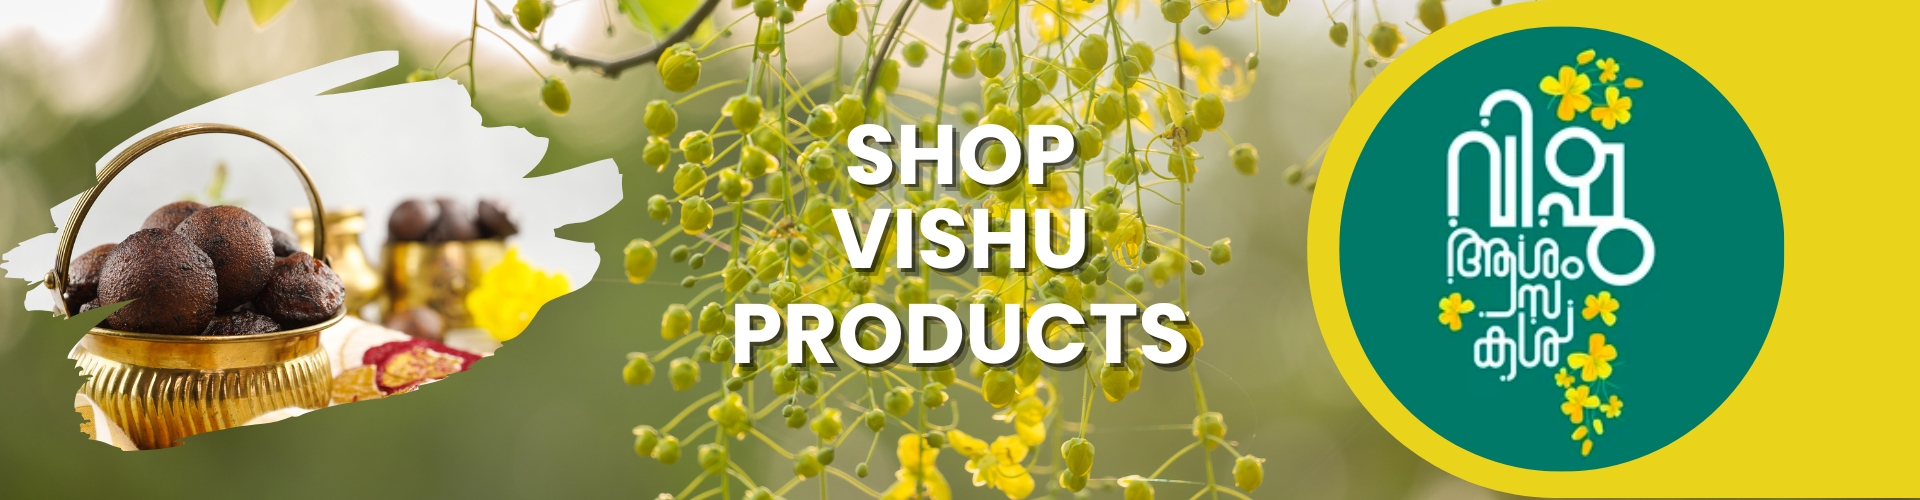 Vishu Website Banner